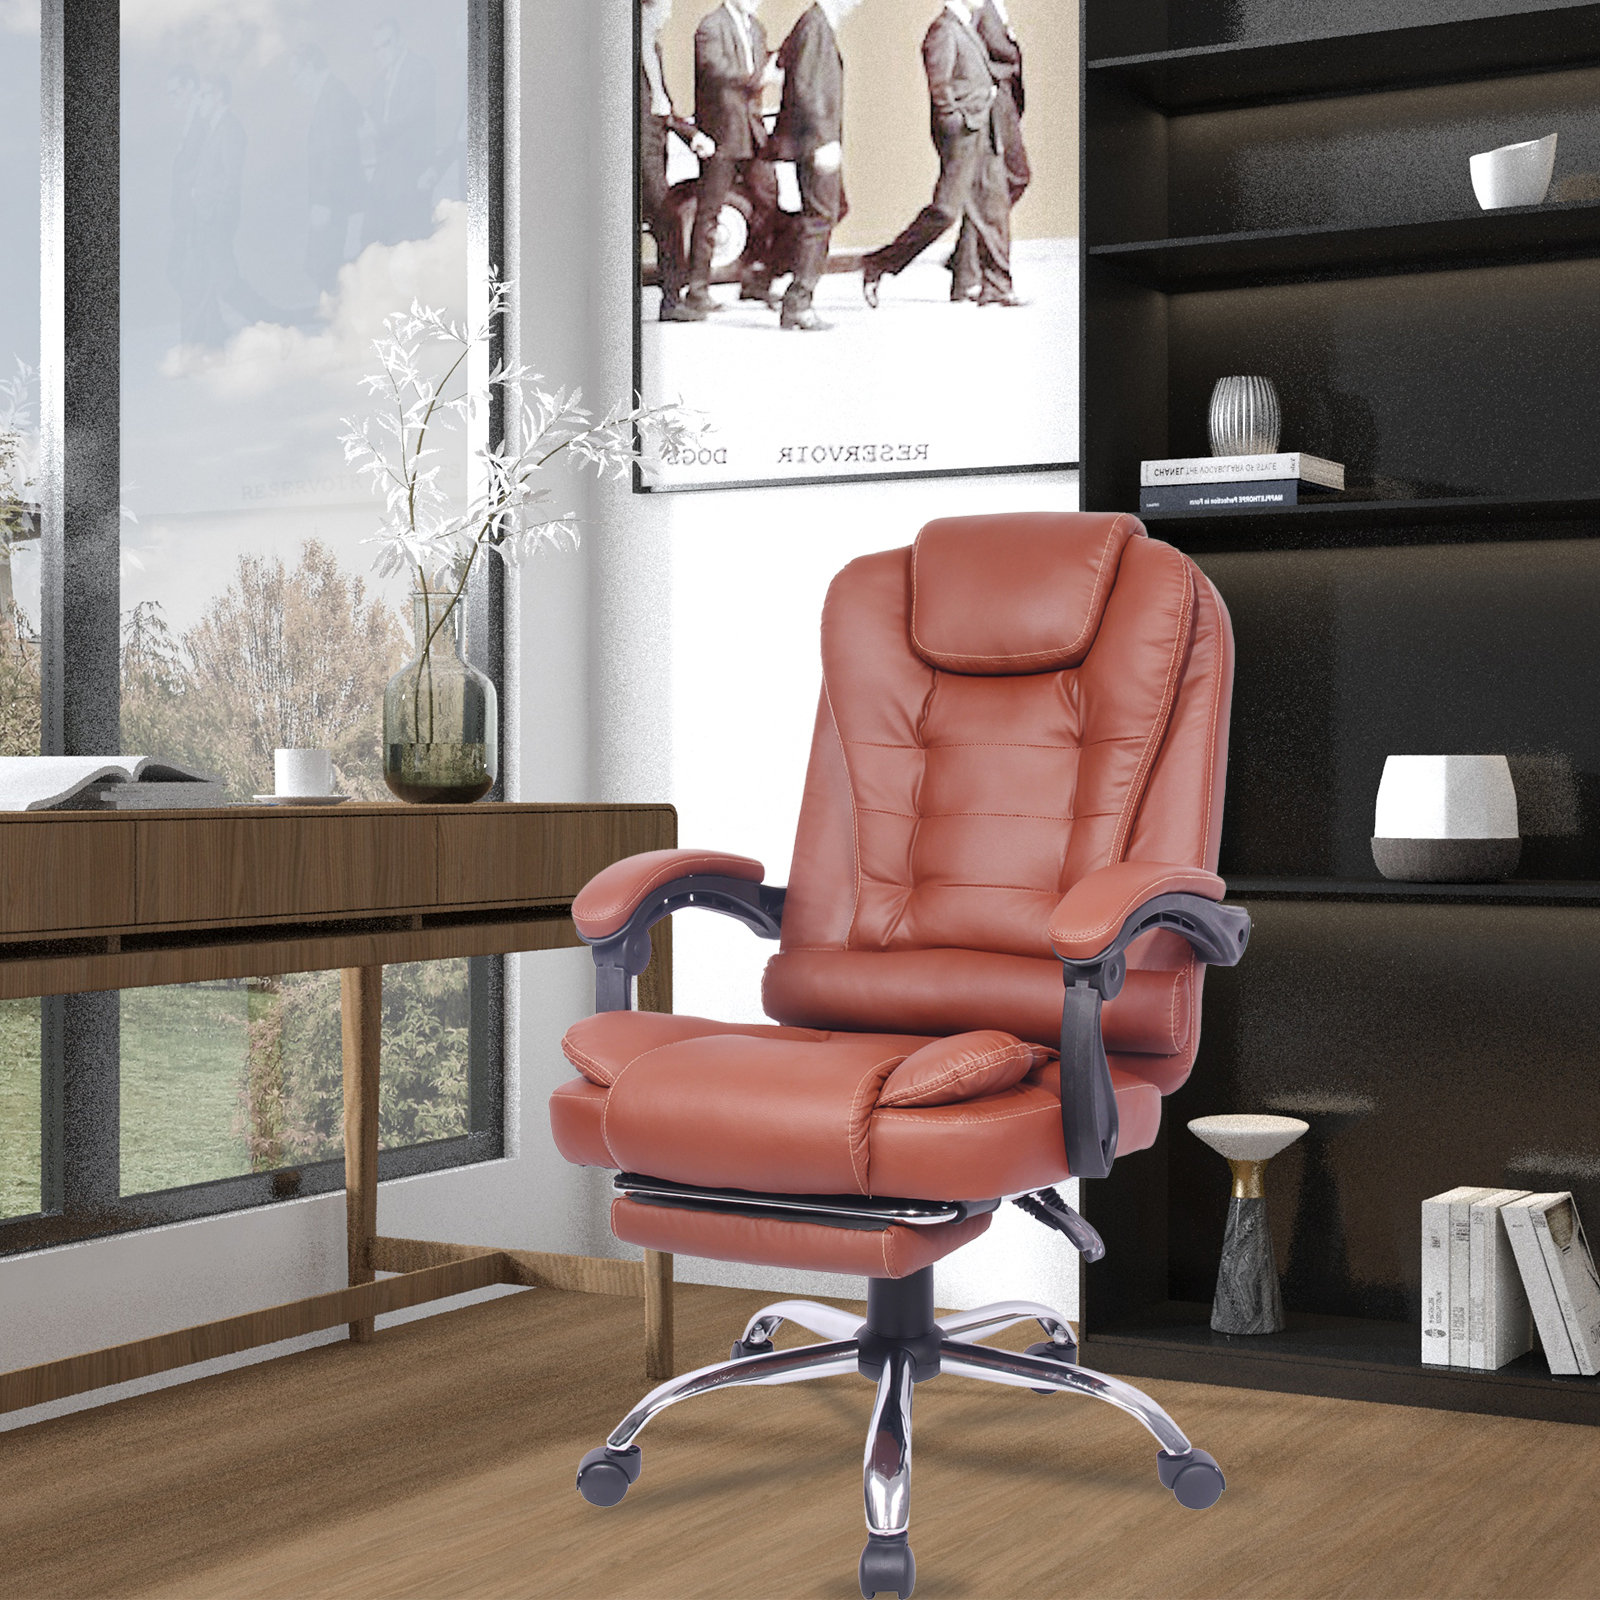 Ergonomic Bonded Leather Computer Chair with Adjustable Tilt Tension Padded Armrests Red Barrel Studio Upholstery Color: Dark Brown